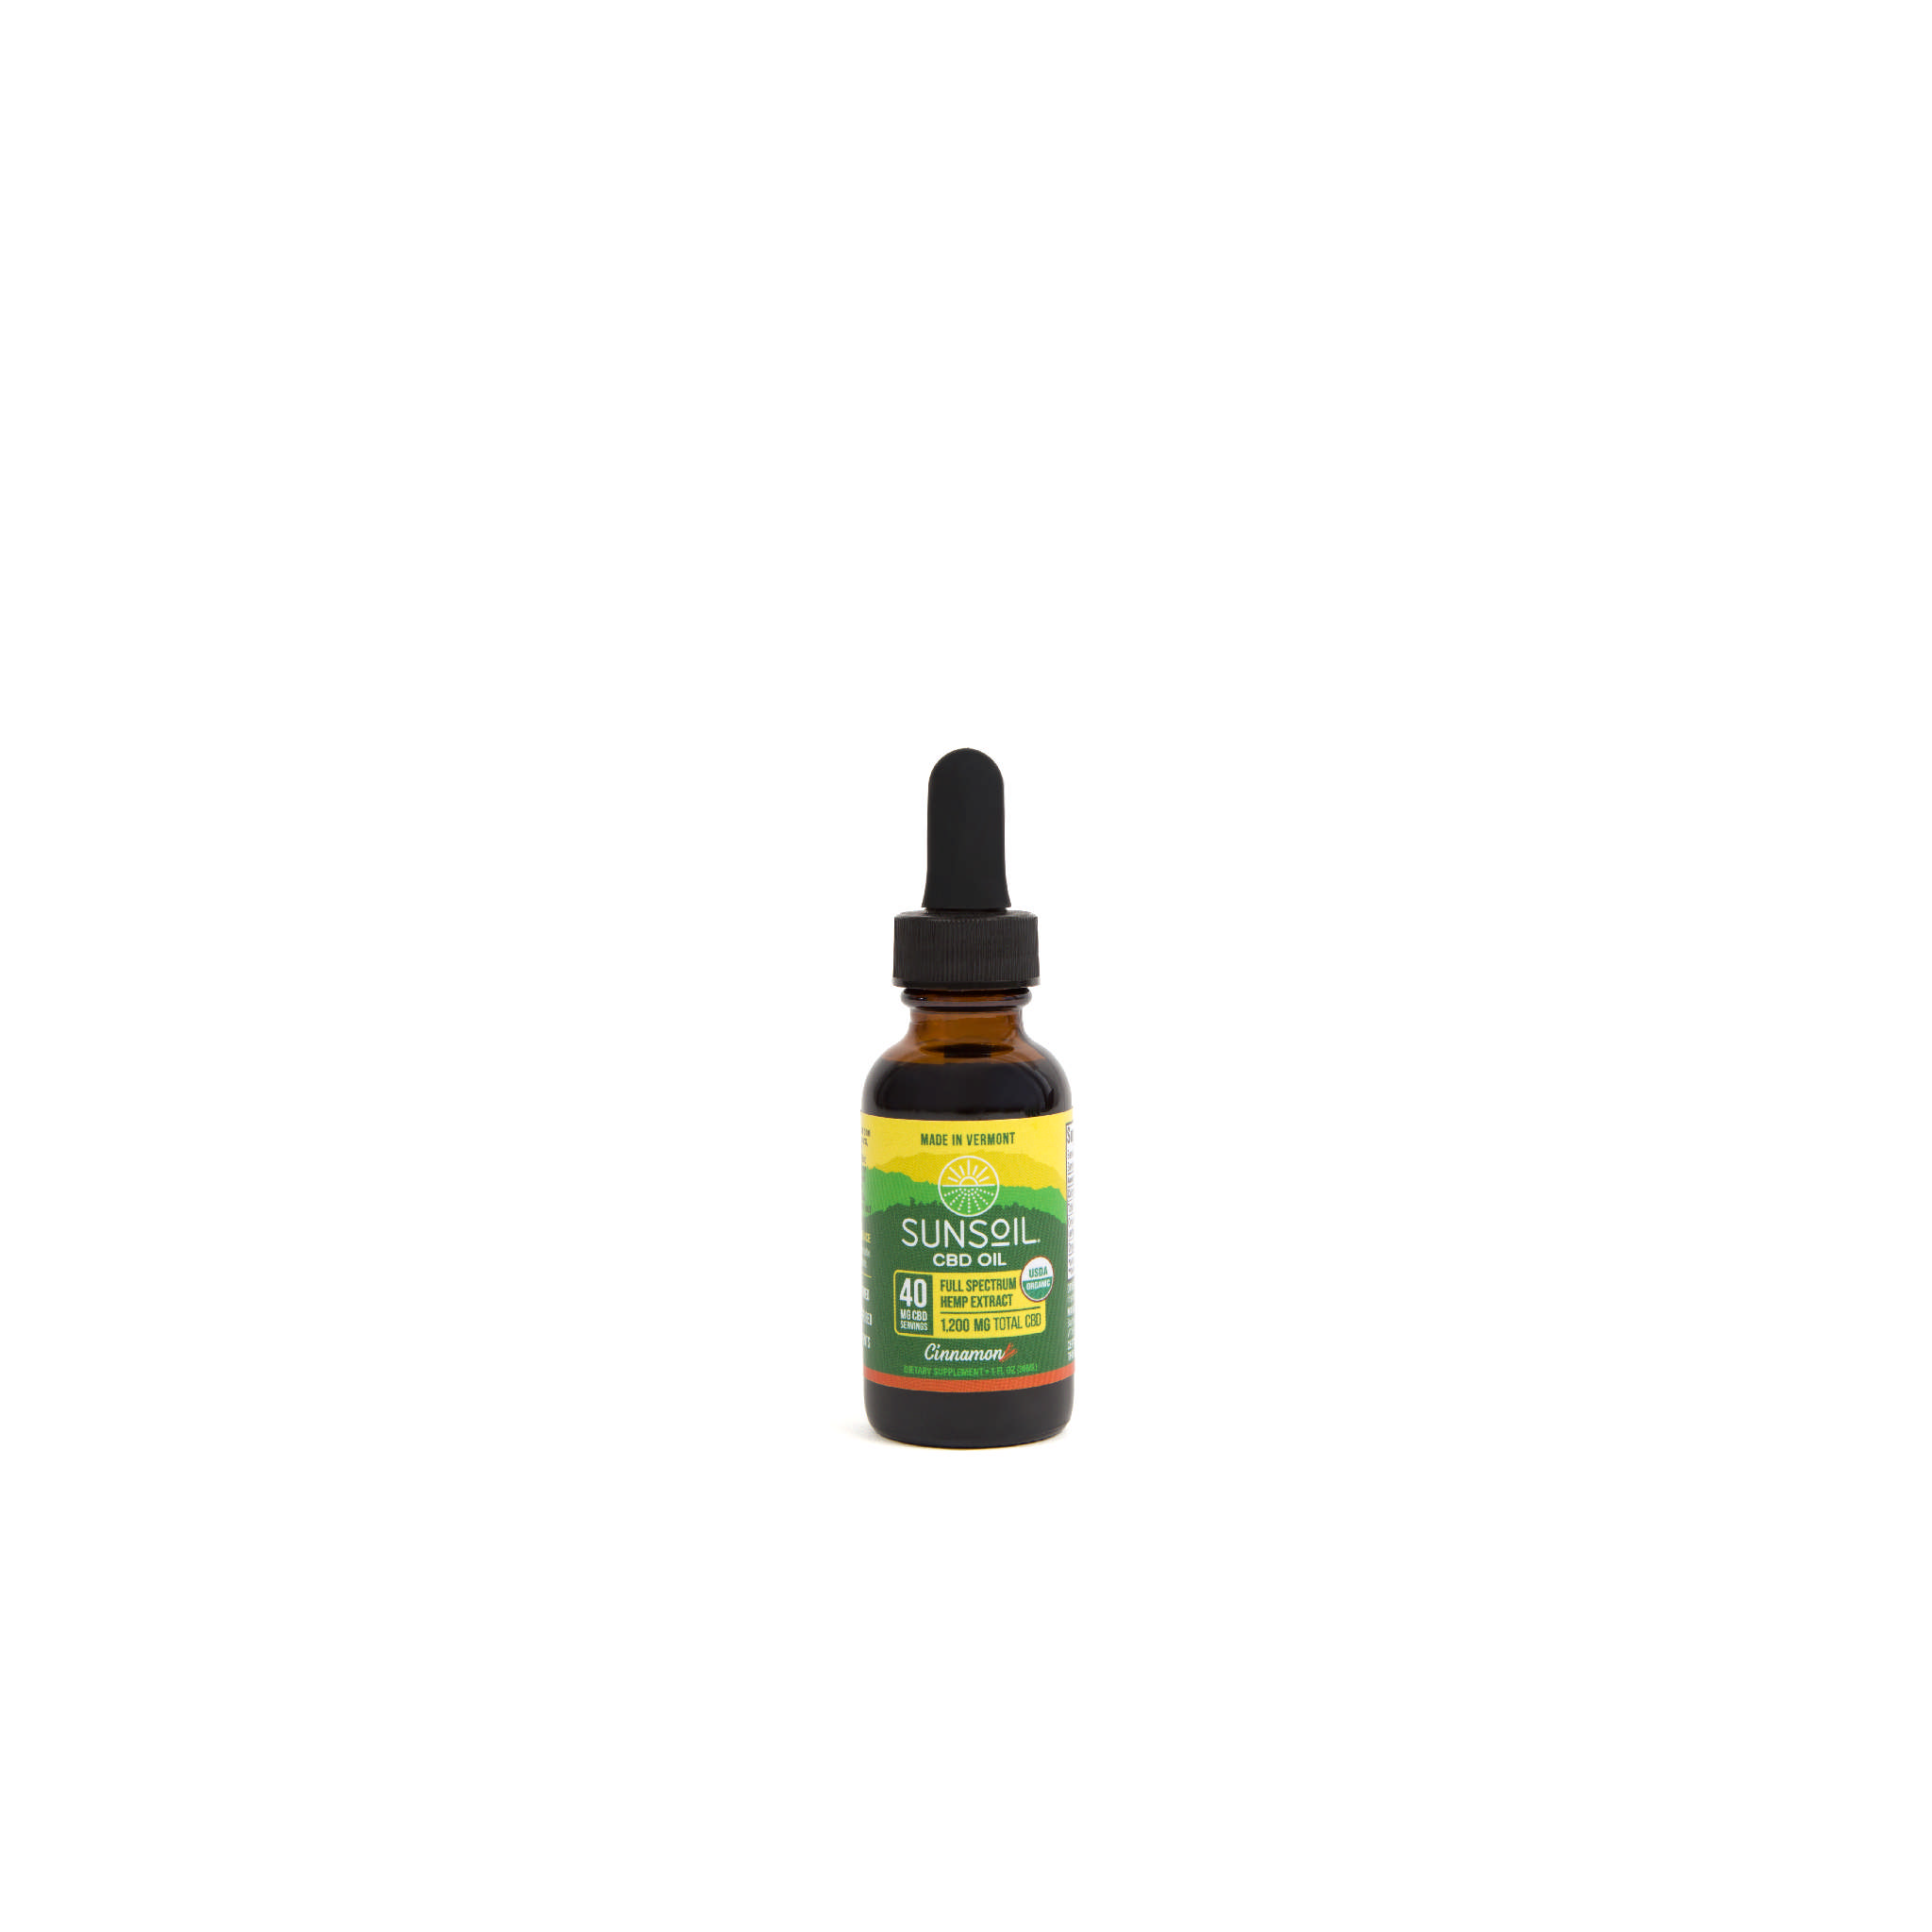 Sunsoil Cbd Oil - Cbd Oil 40 mg Cinnamon